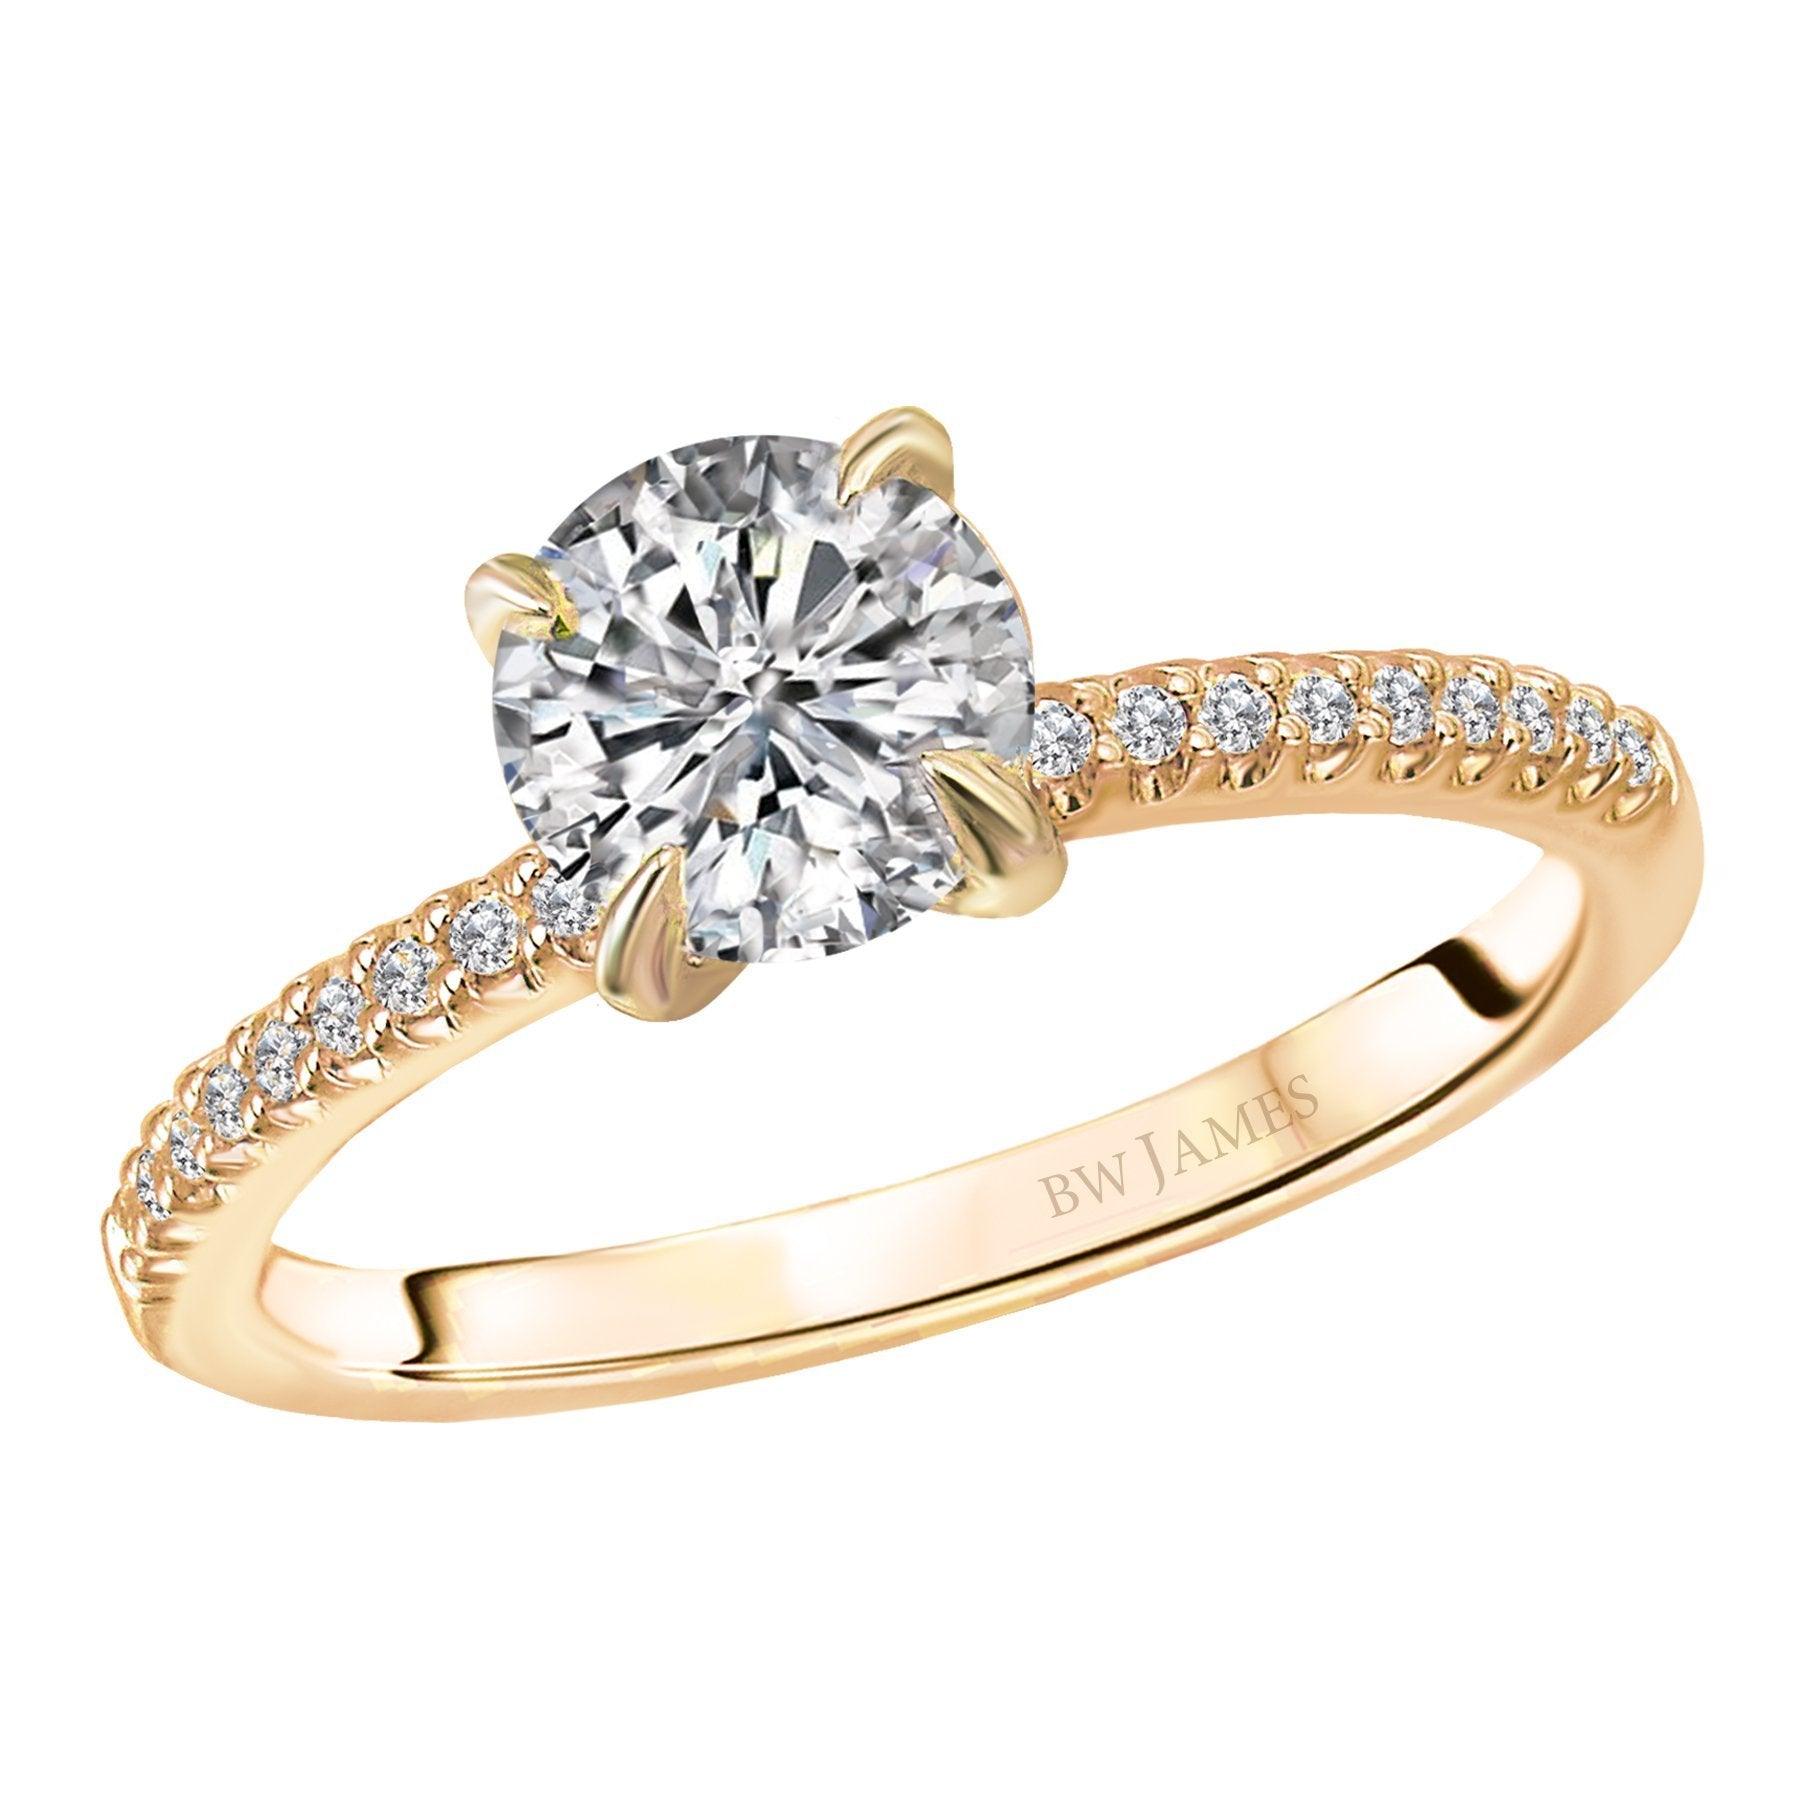 BW JAMES Engagement Rings "The London" Classic Semi-Mount Diamond Ring